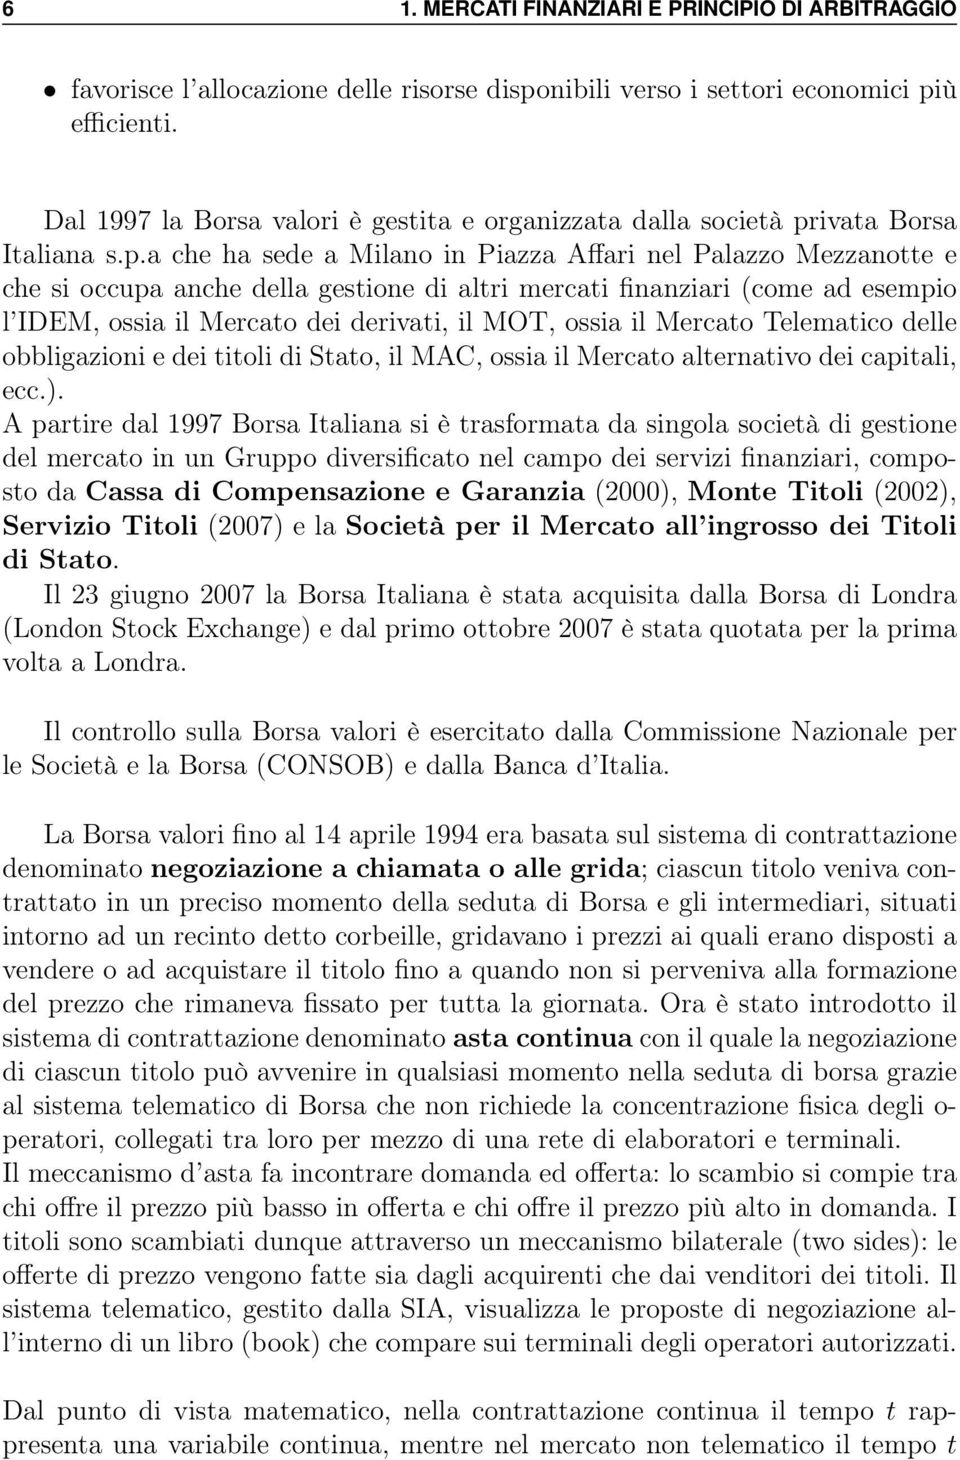 ivata Borsa Italiana s.p.